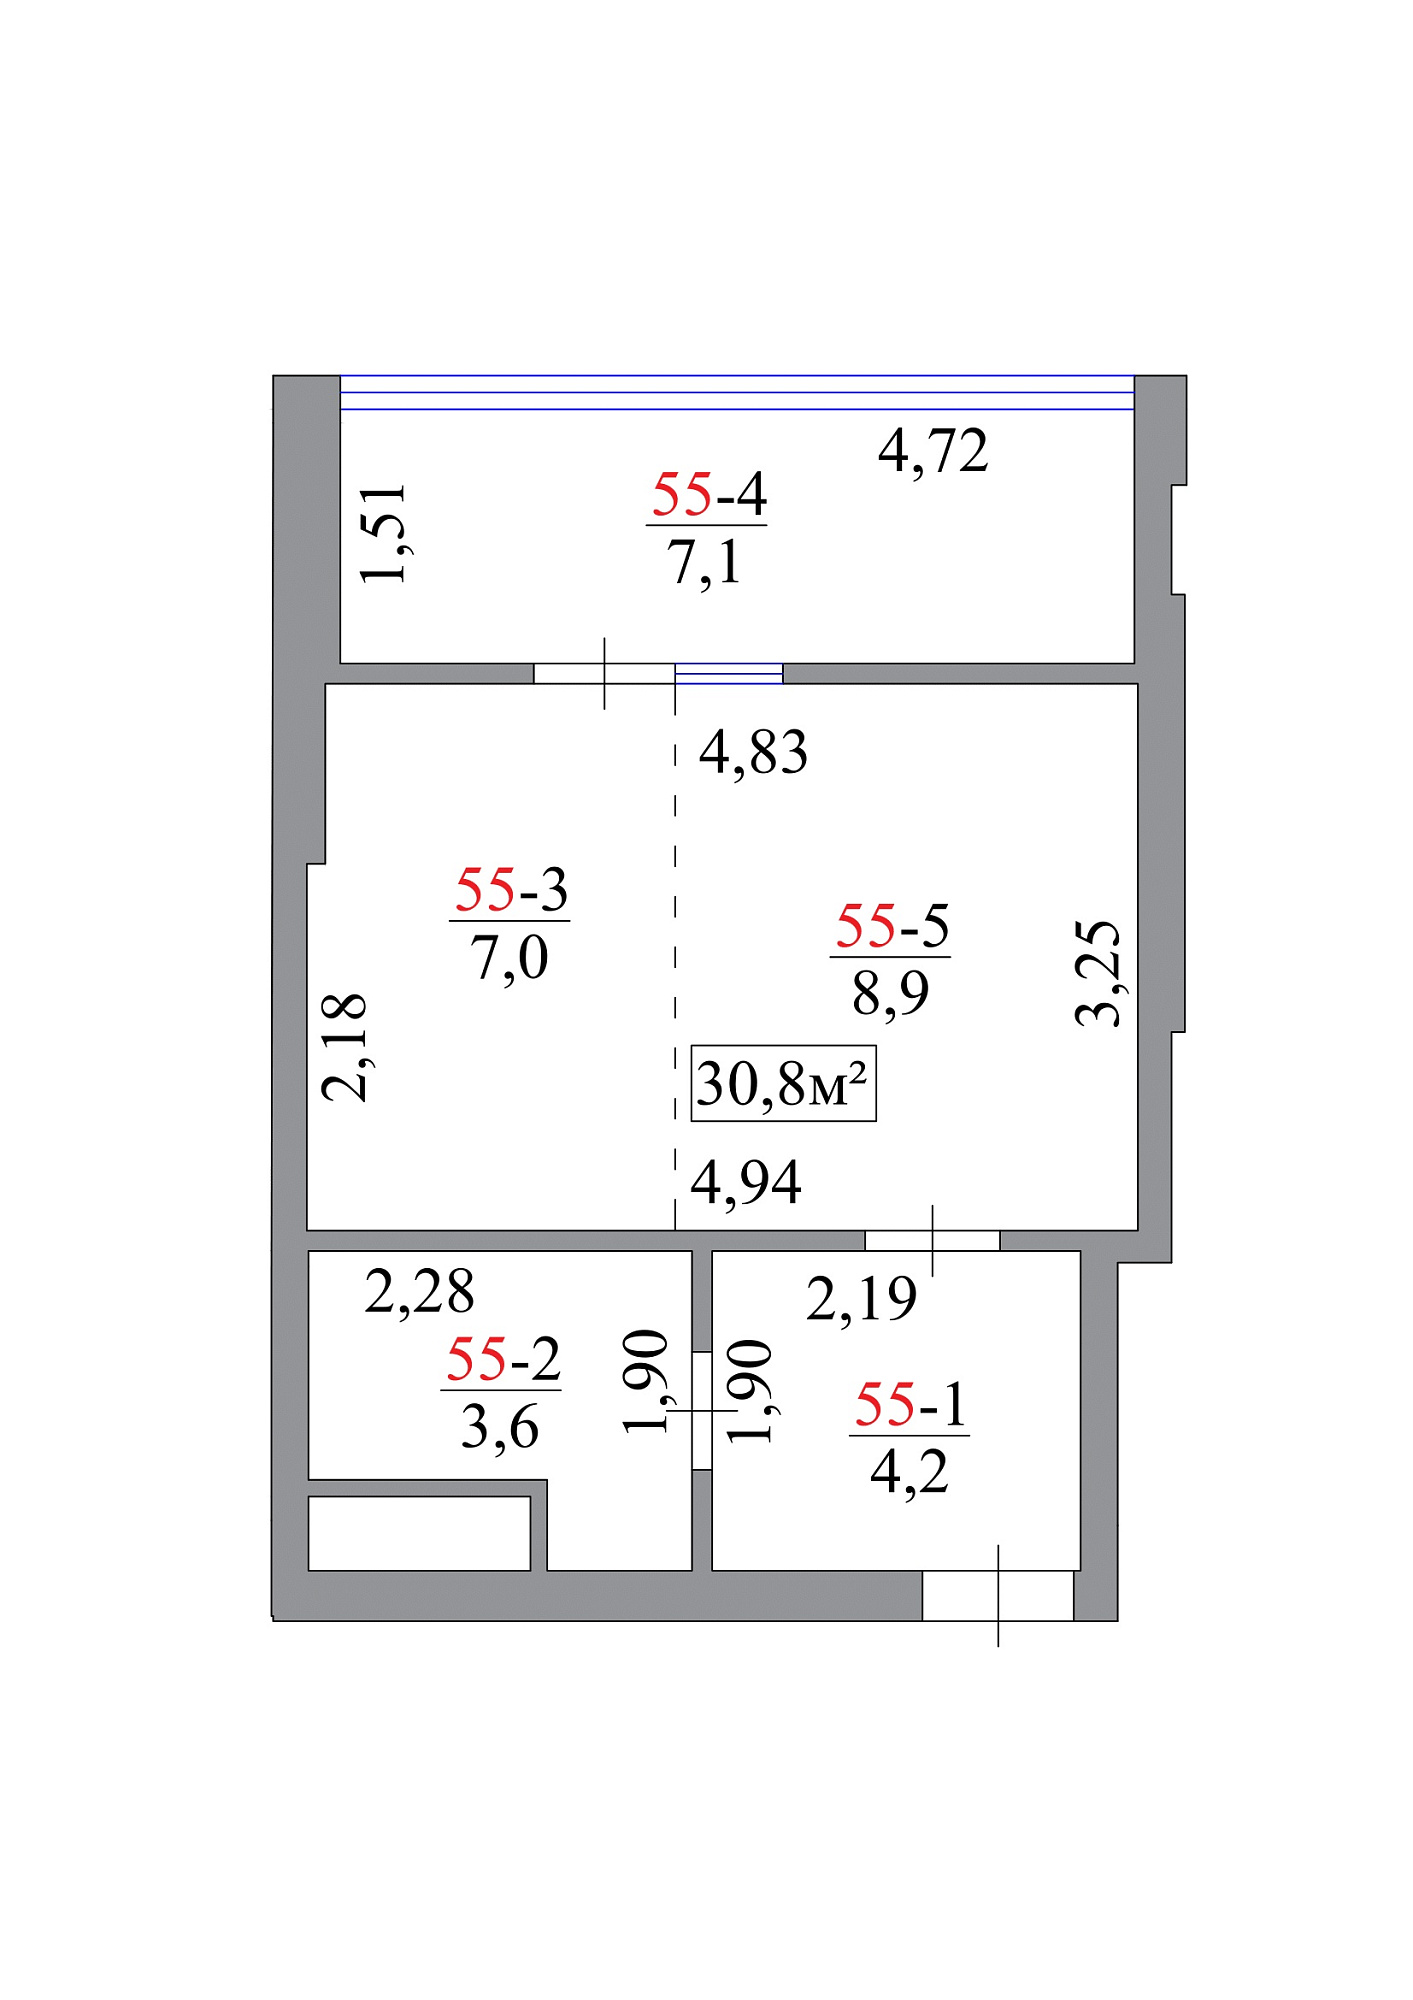 Planning Smart flats area 30.8m2, AB-07-06/00050.